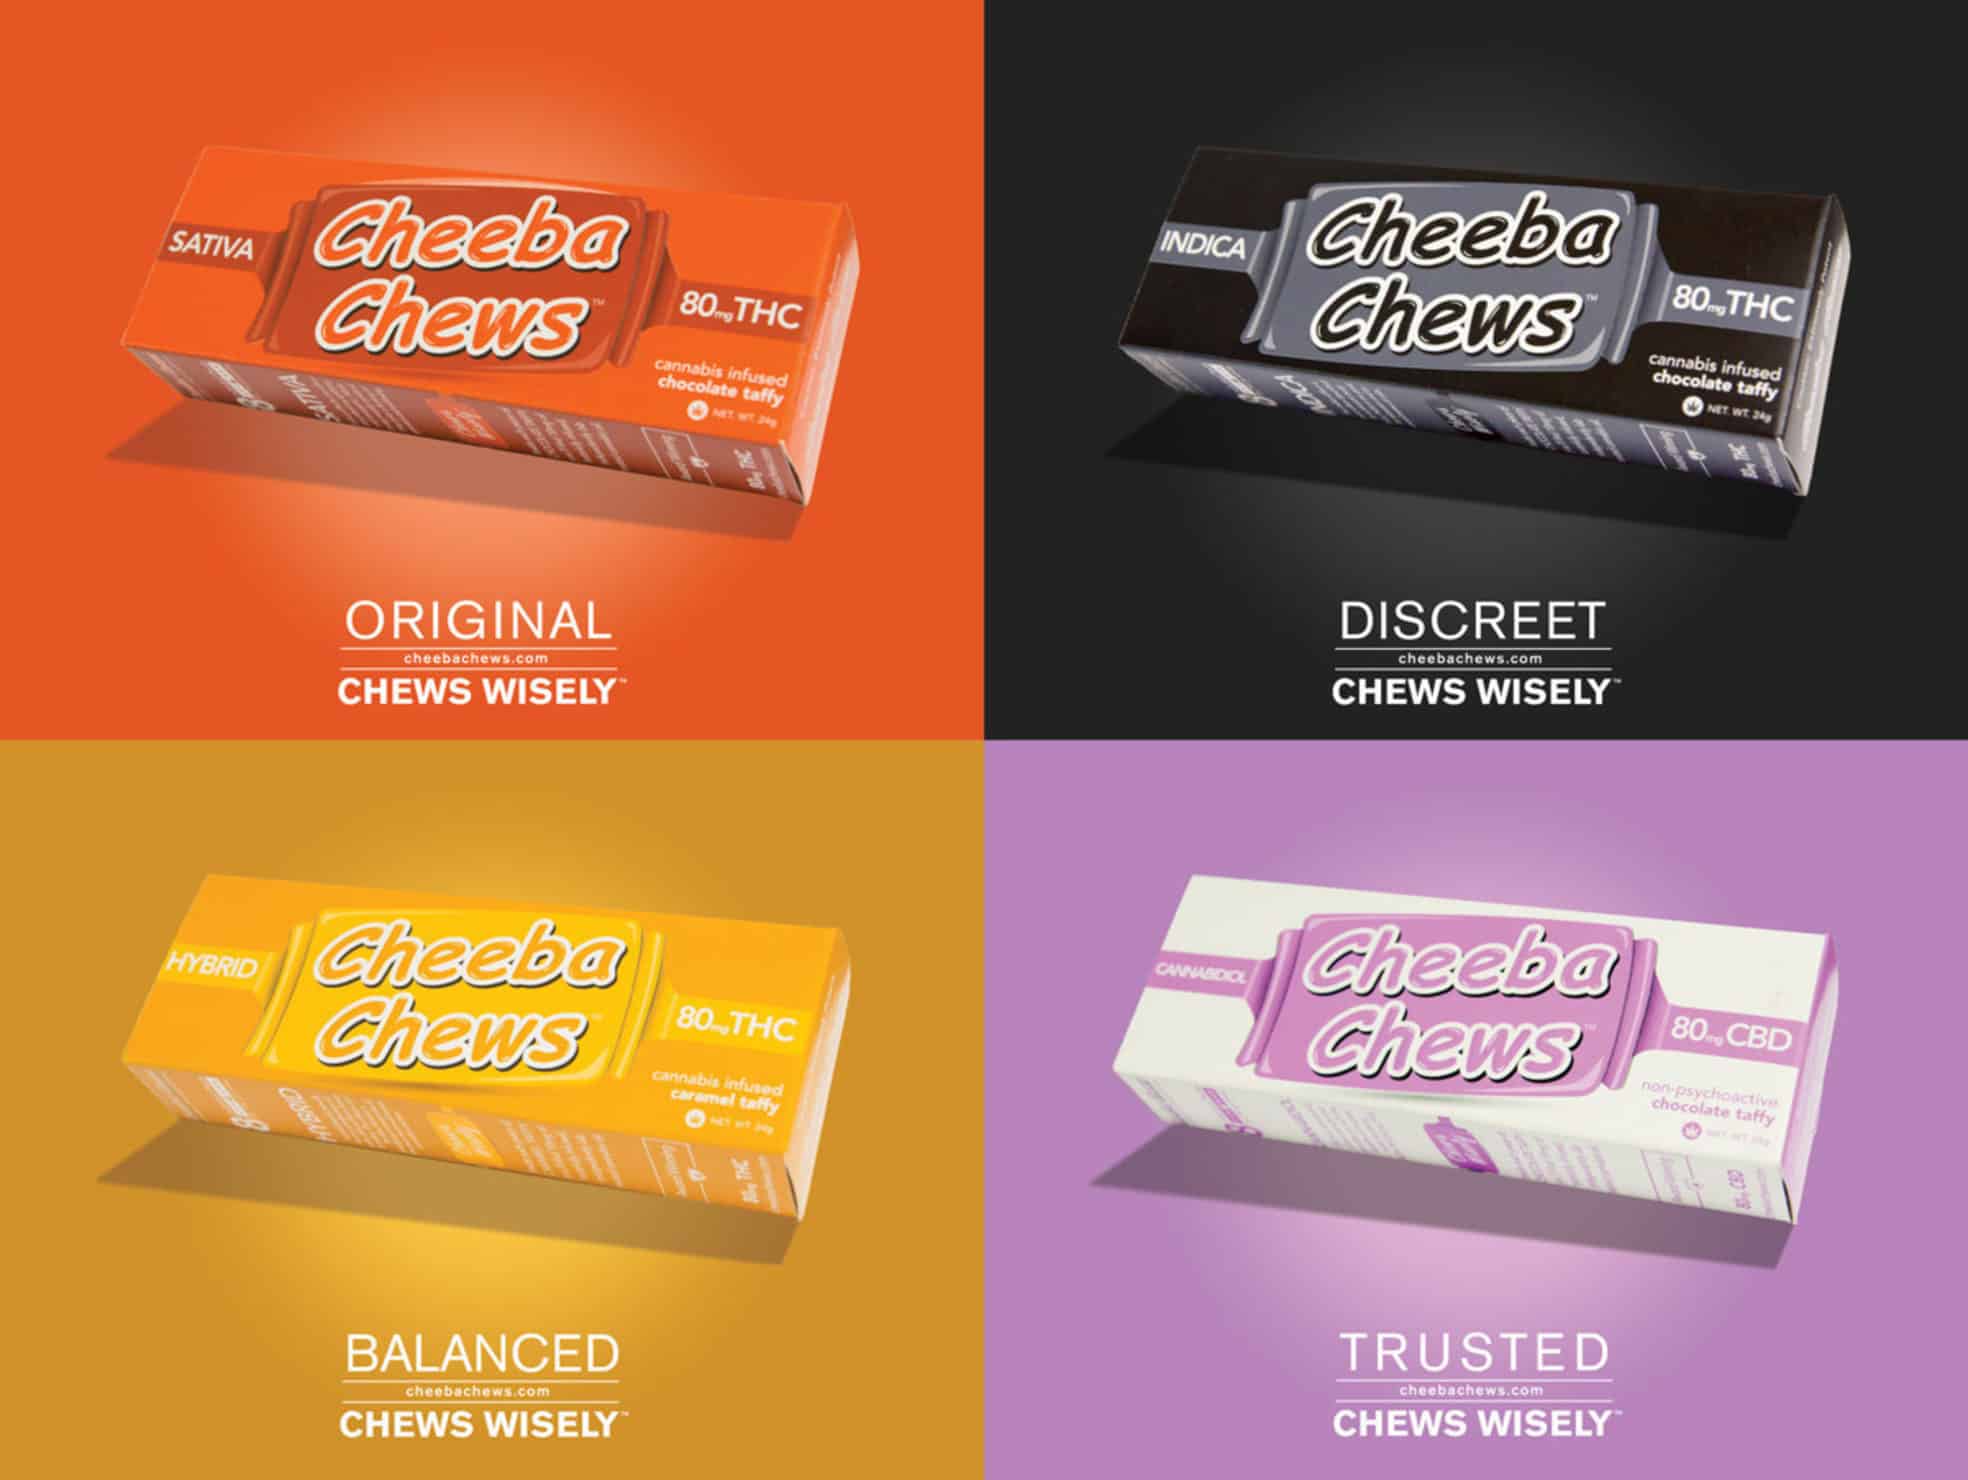 Cheeba Chews Product Review